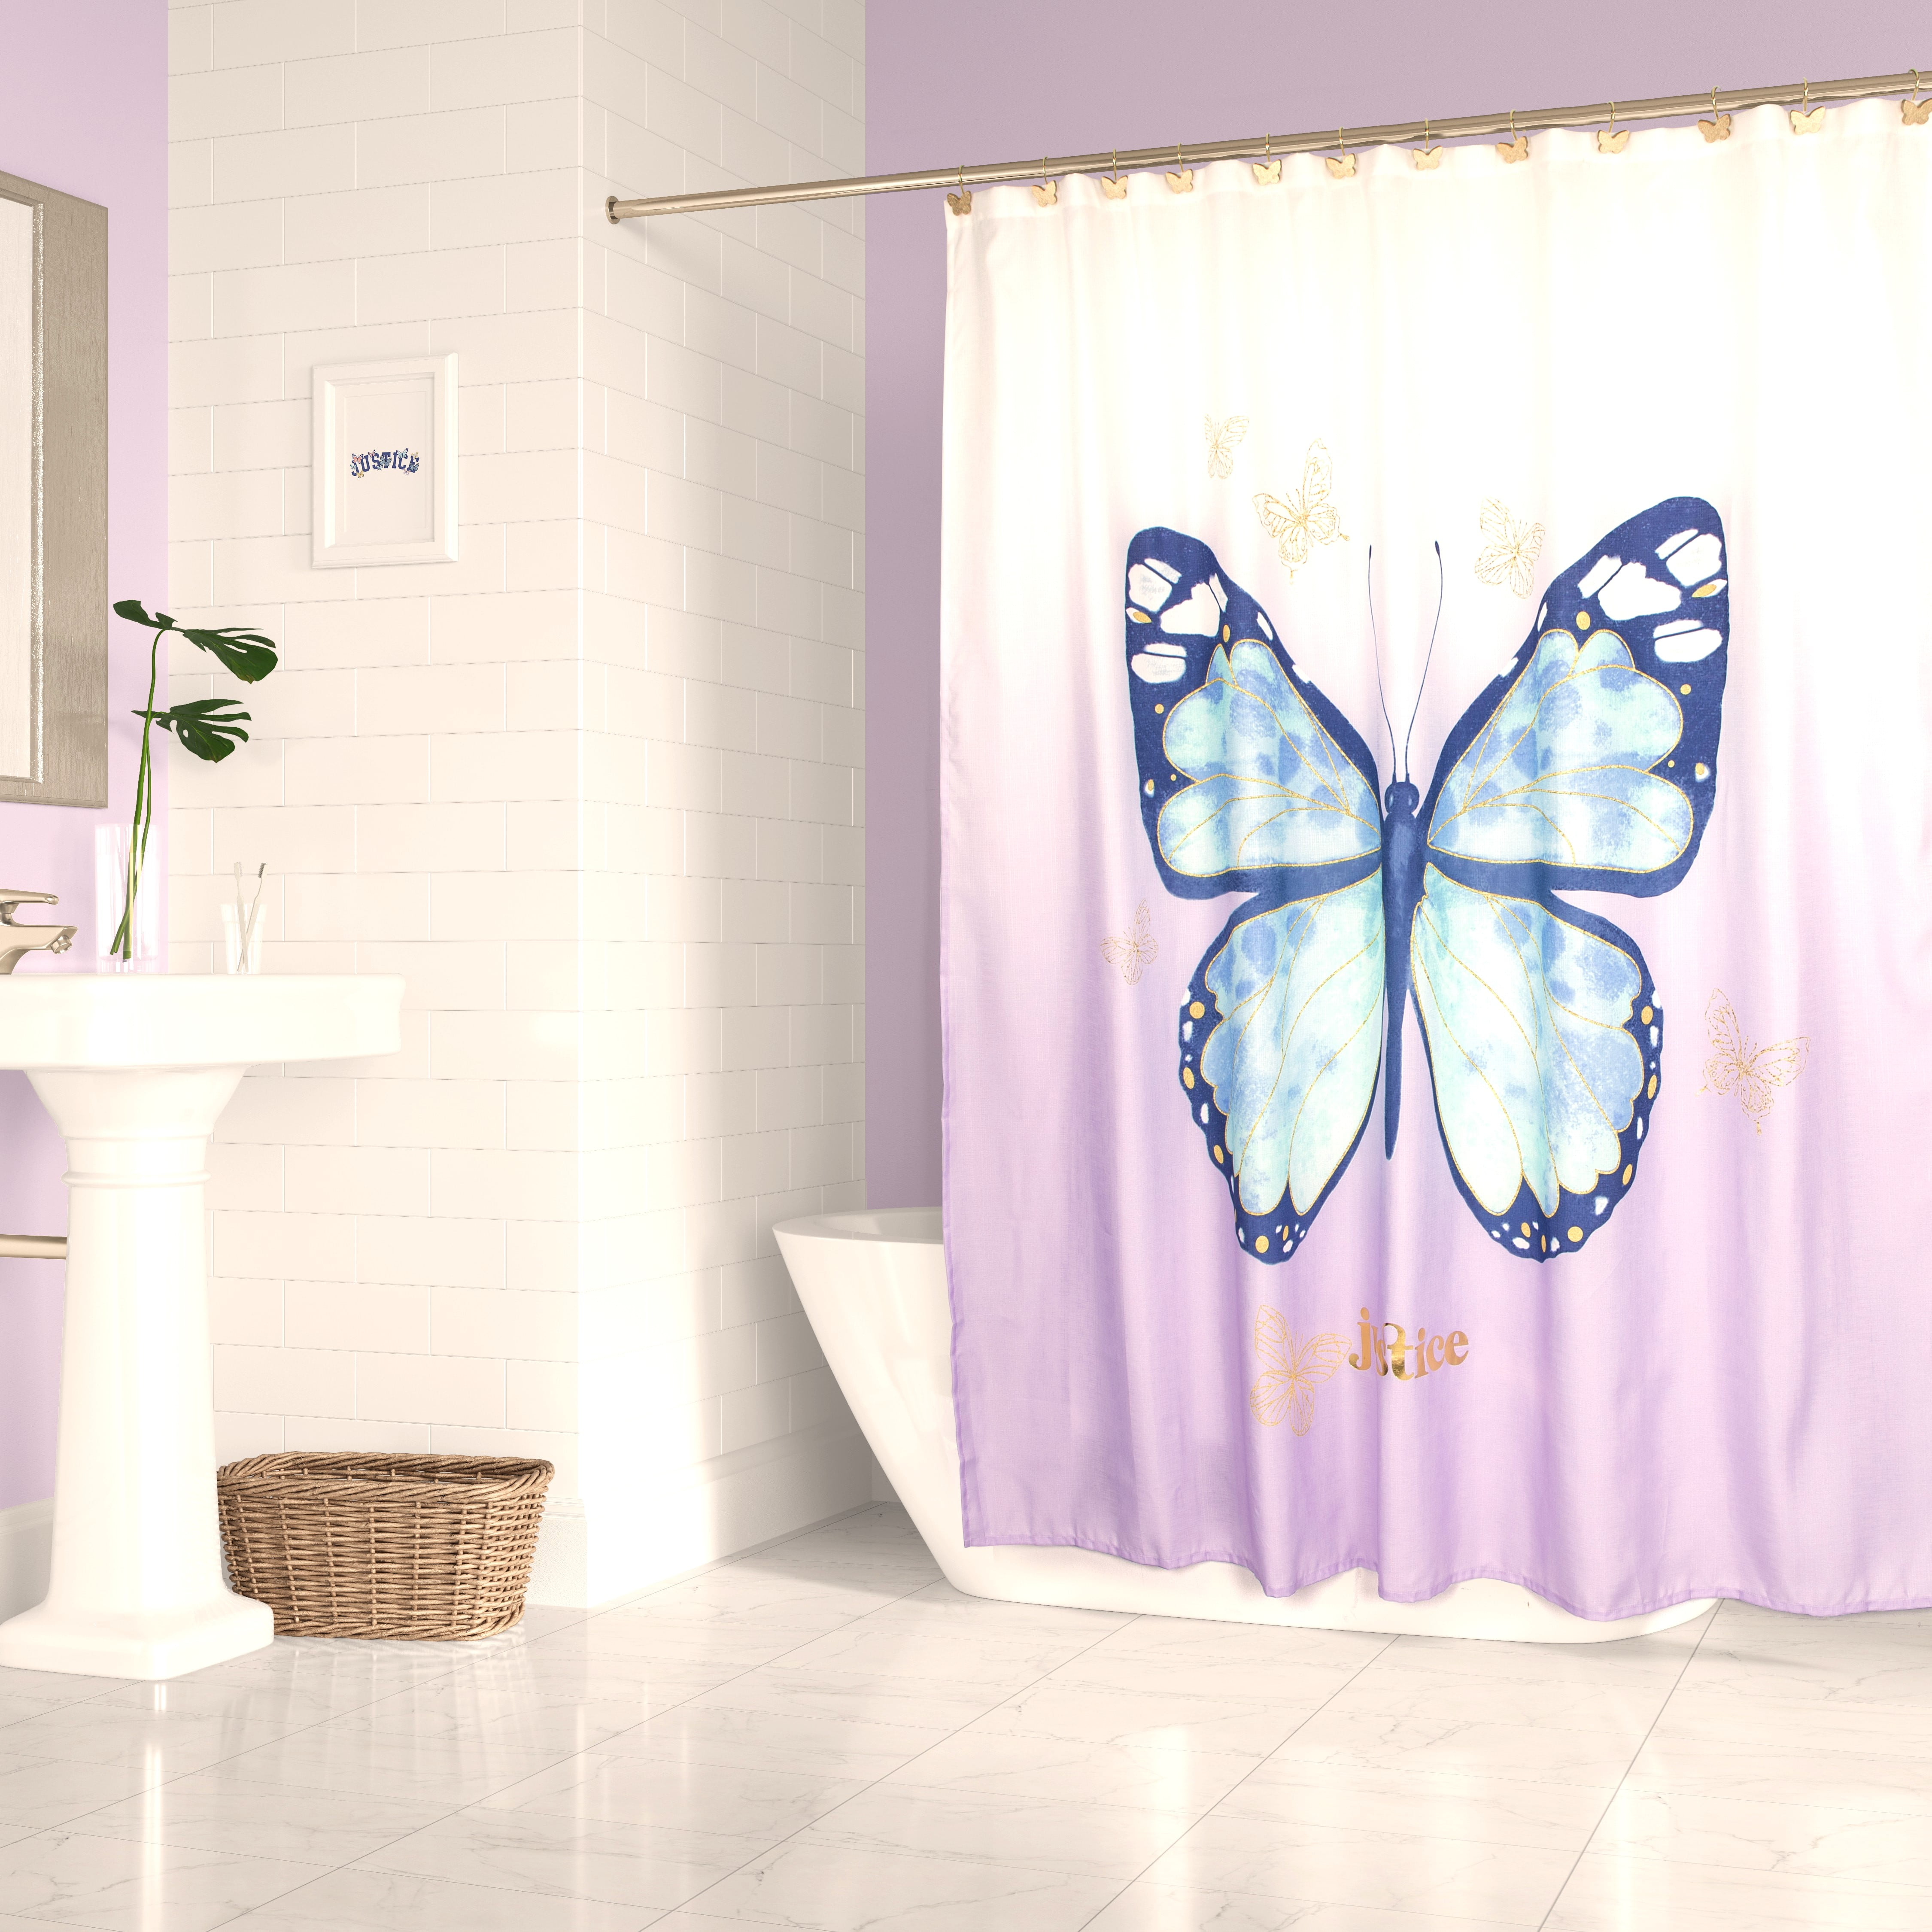 Golden stars and light spots Shower Curtain Bathroom Decor & 12hooks 71*71inches 